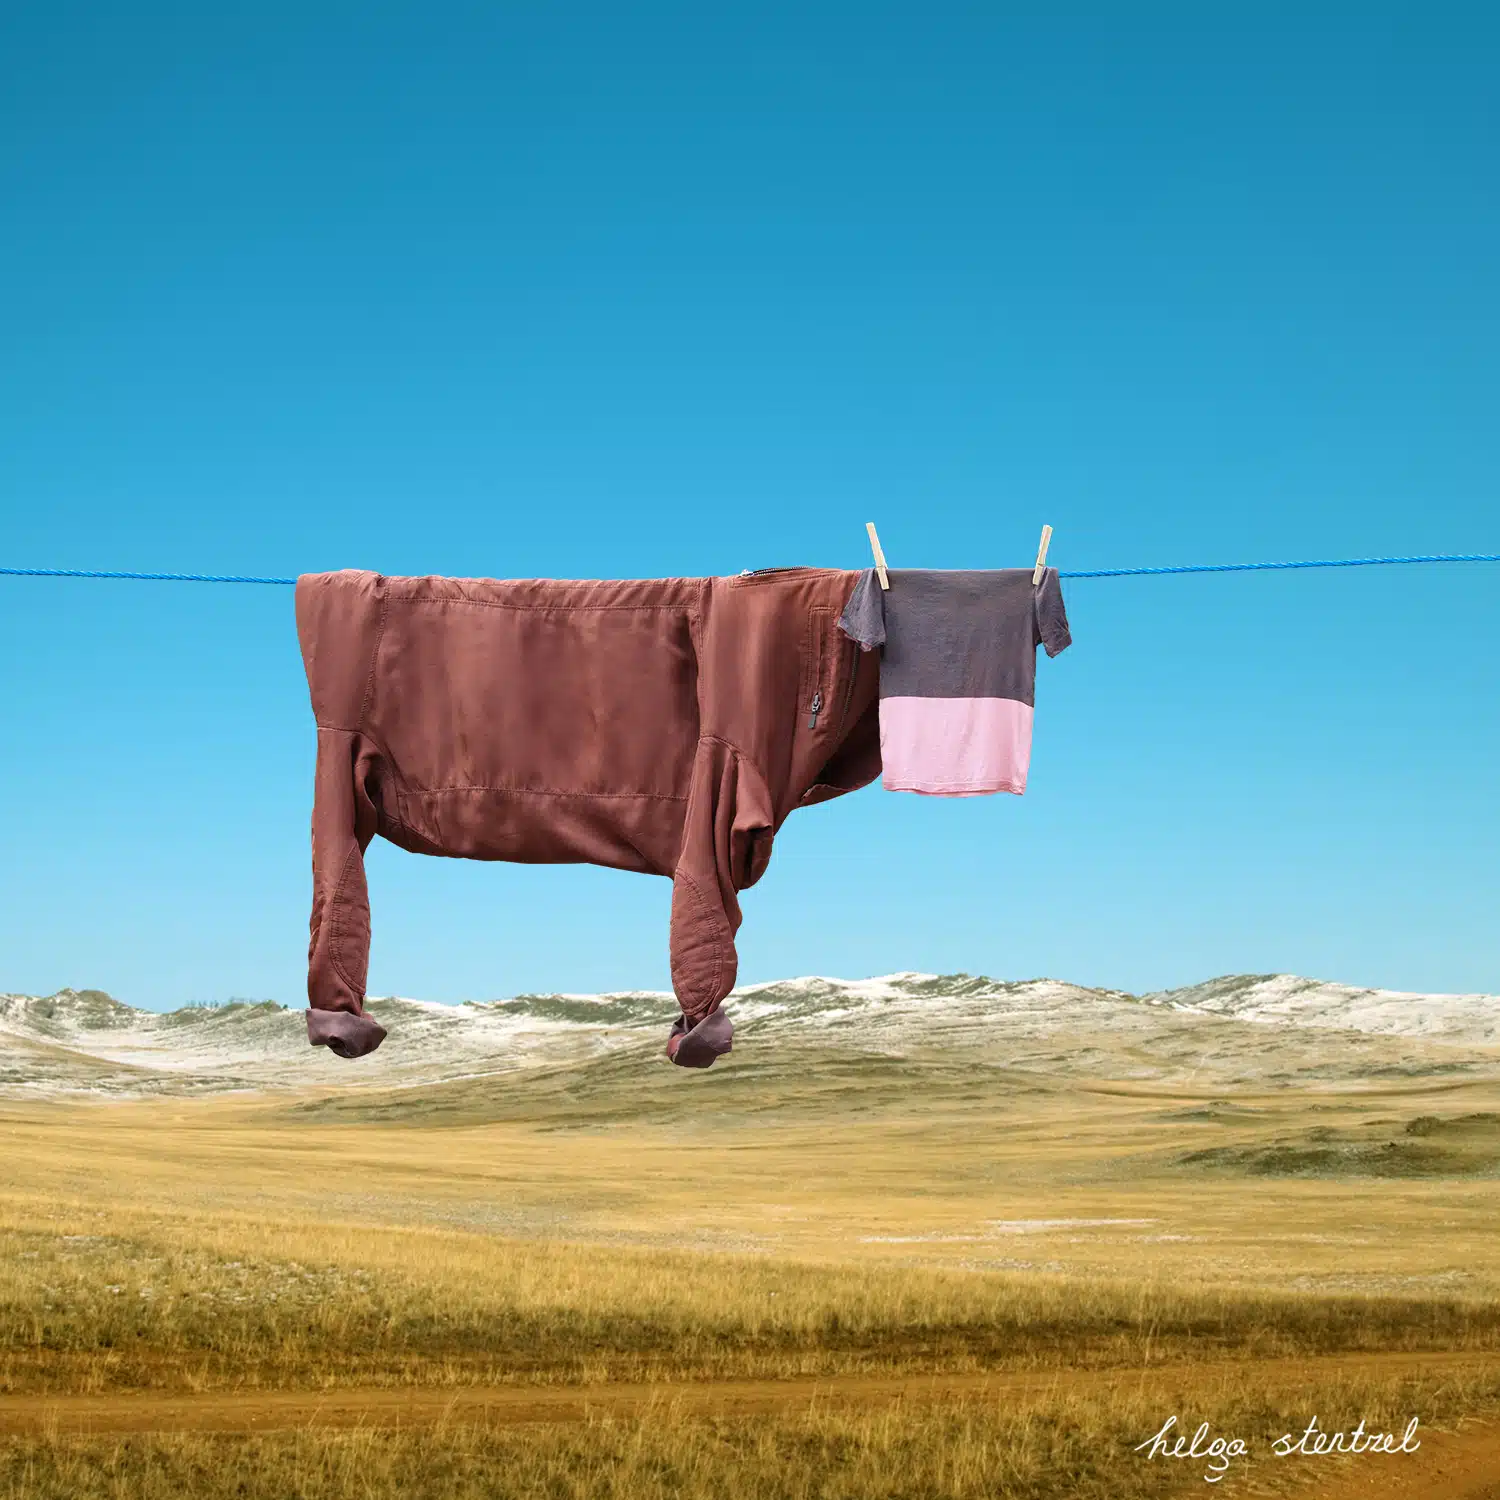 Helga Stentzel fotografia surrealismo domestico vaca